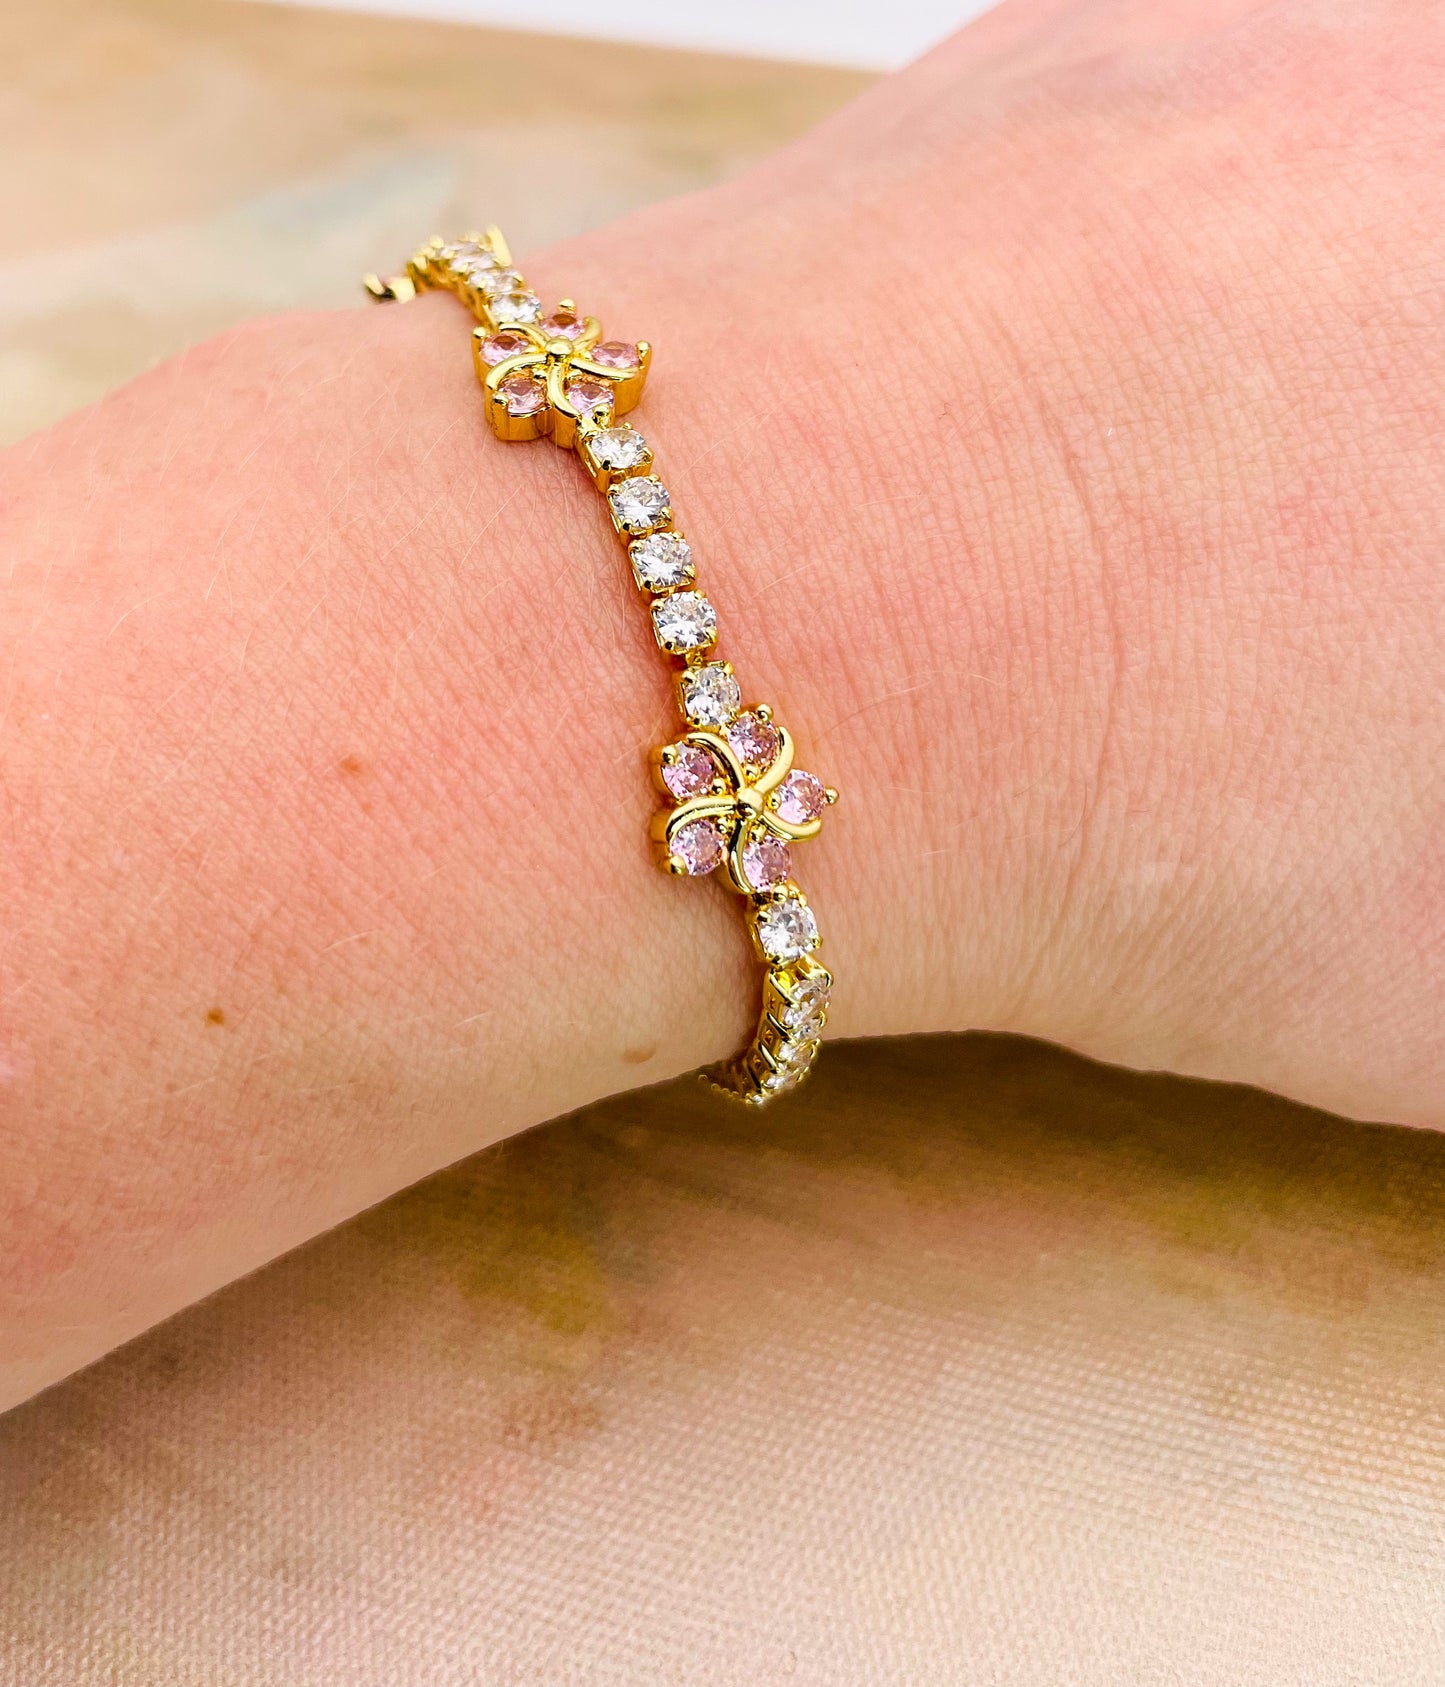 Swarovski Crystals Flower Blossom Gold Bracelet